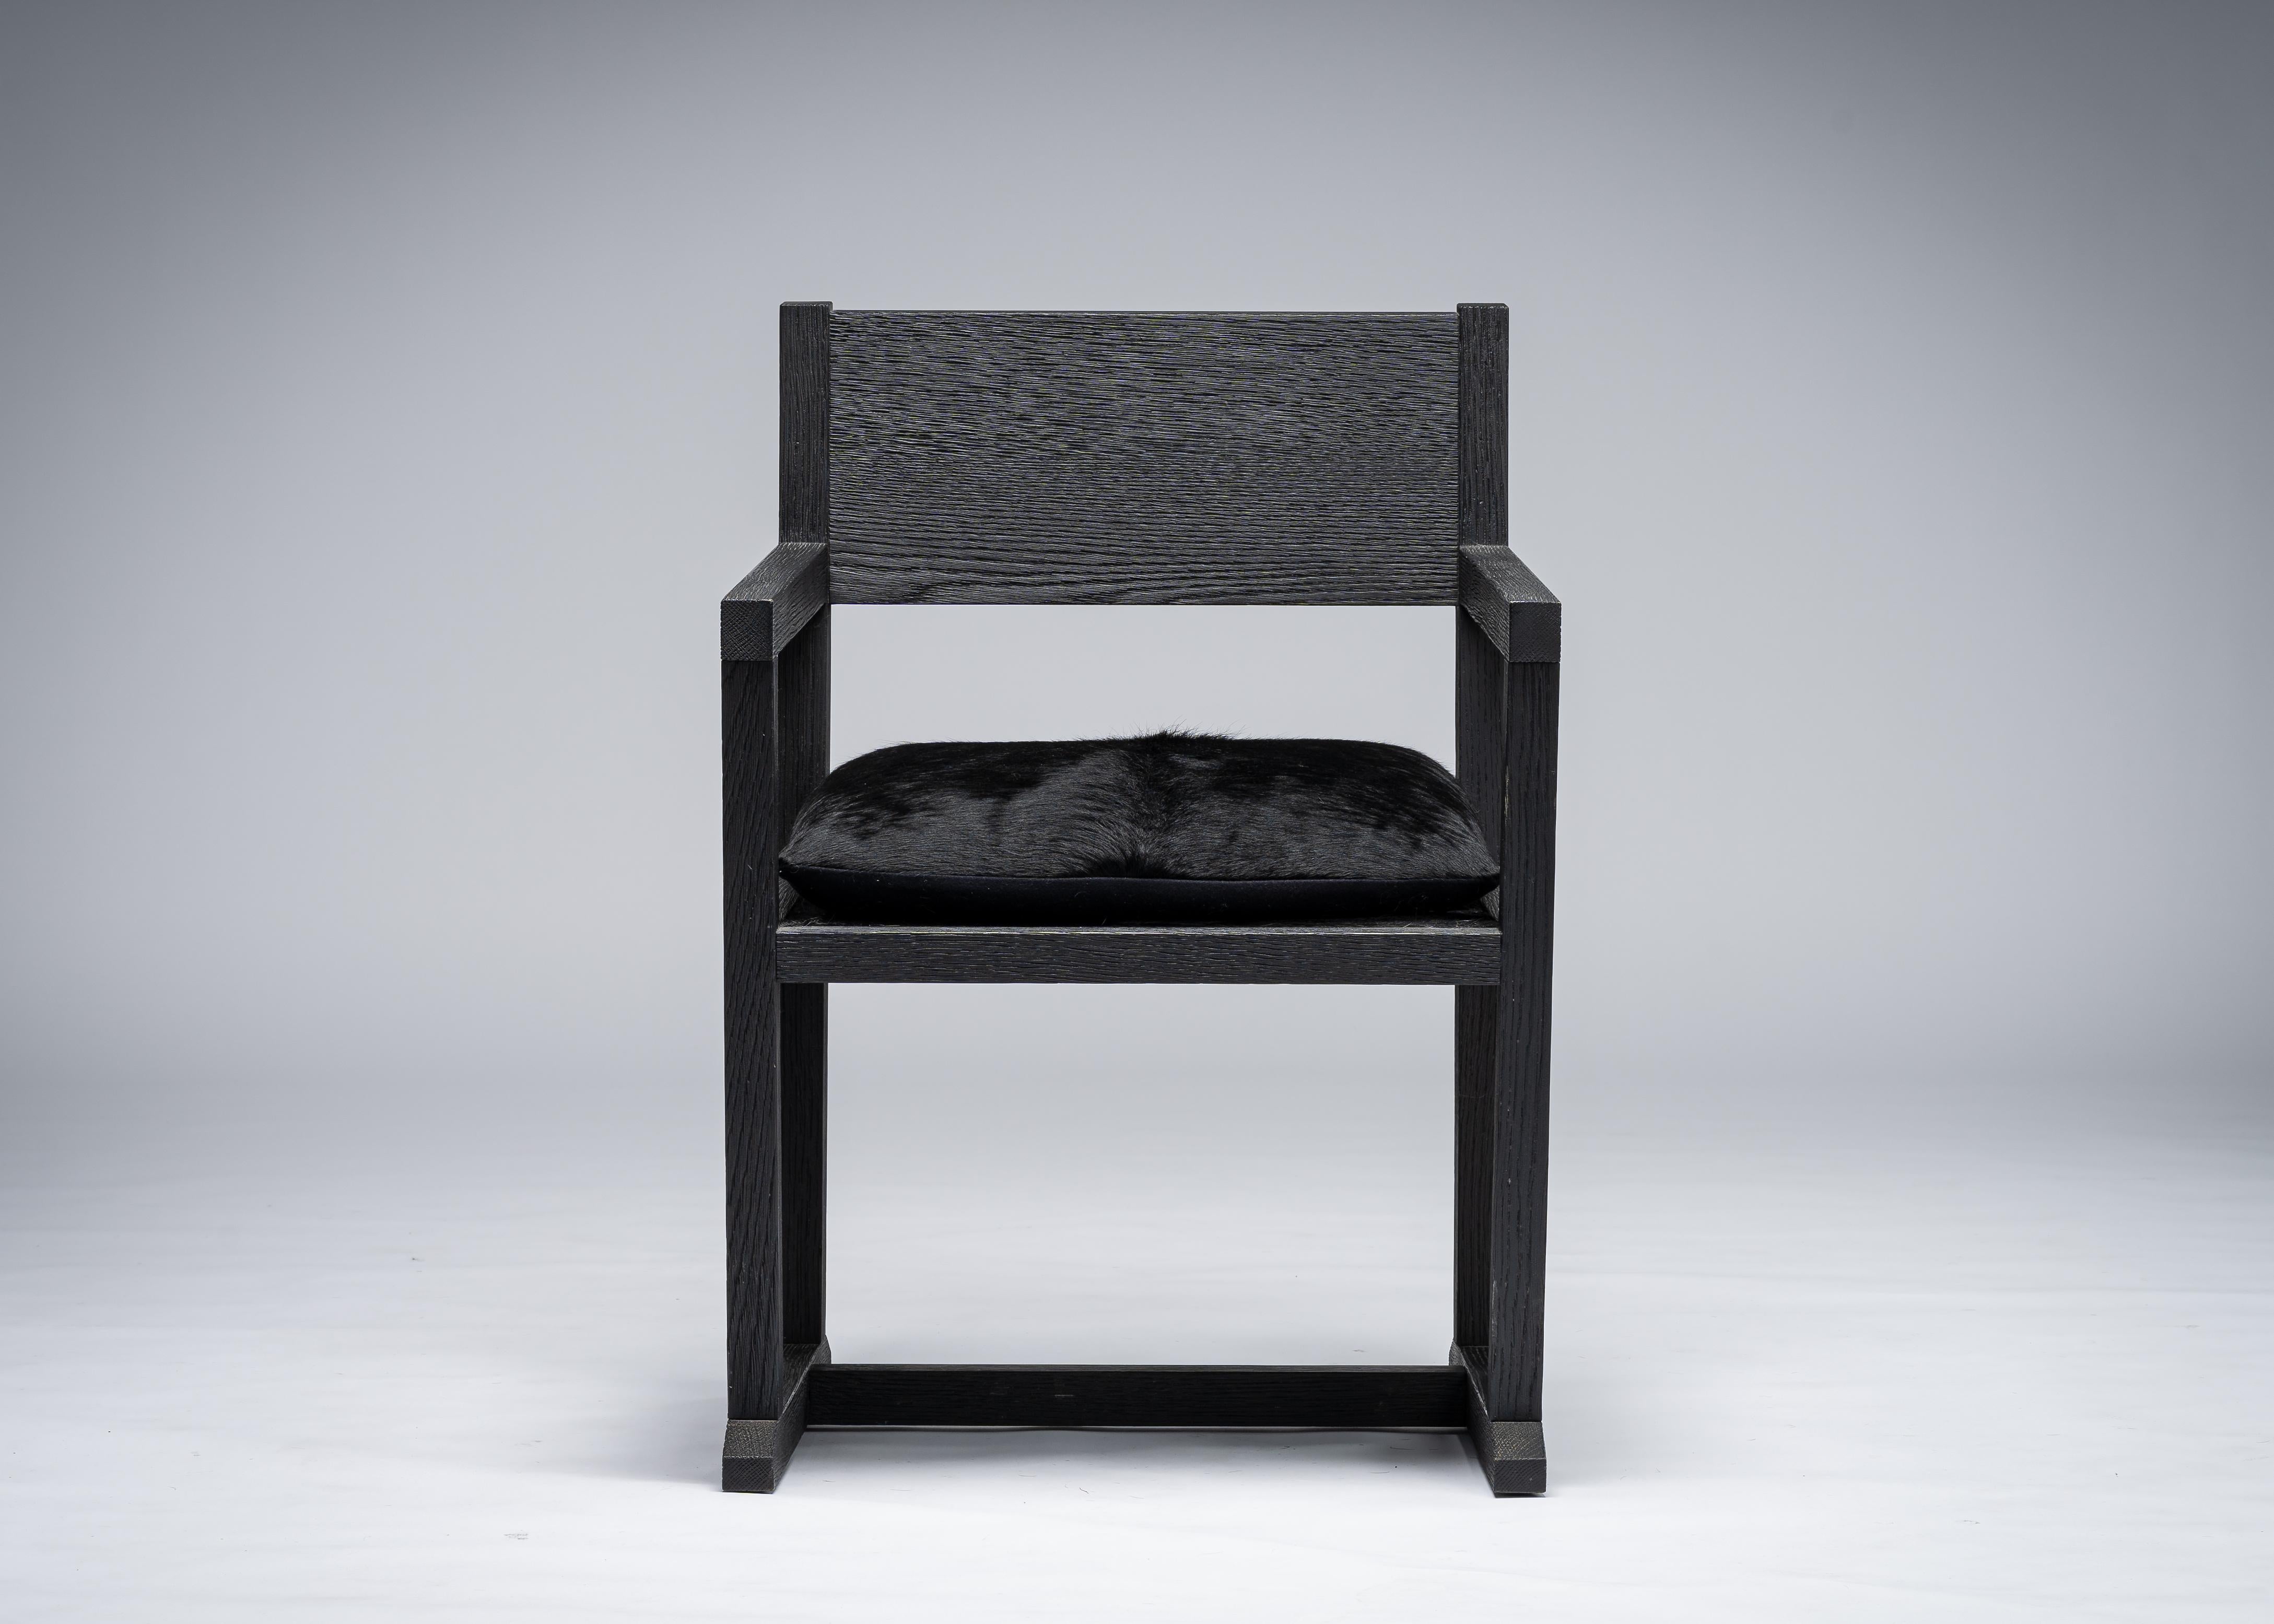 Louis chair by Mandy Graham

Louis
L01 - chair / armchair / desk / dining chair
sandblasted oak/hairy cowhide seat
Measures: 24